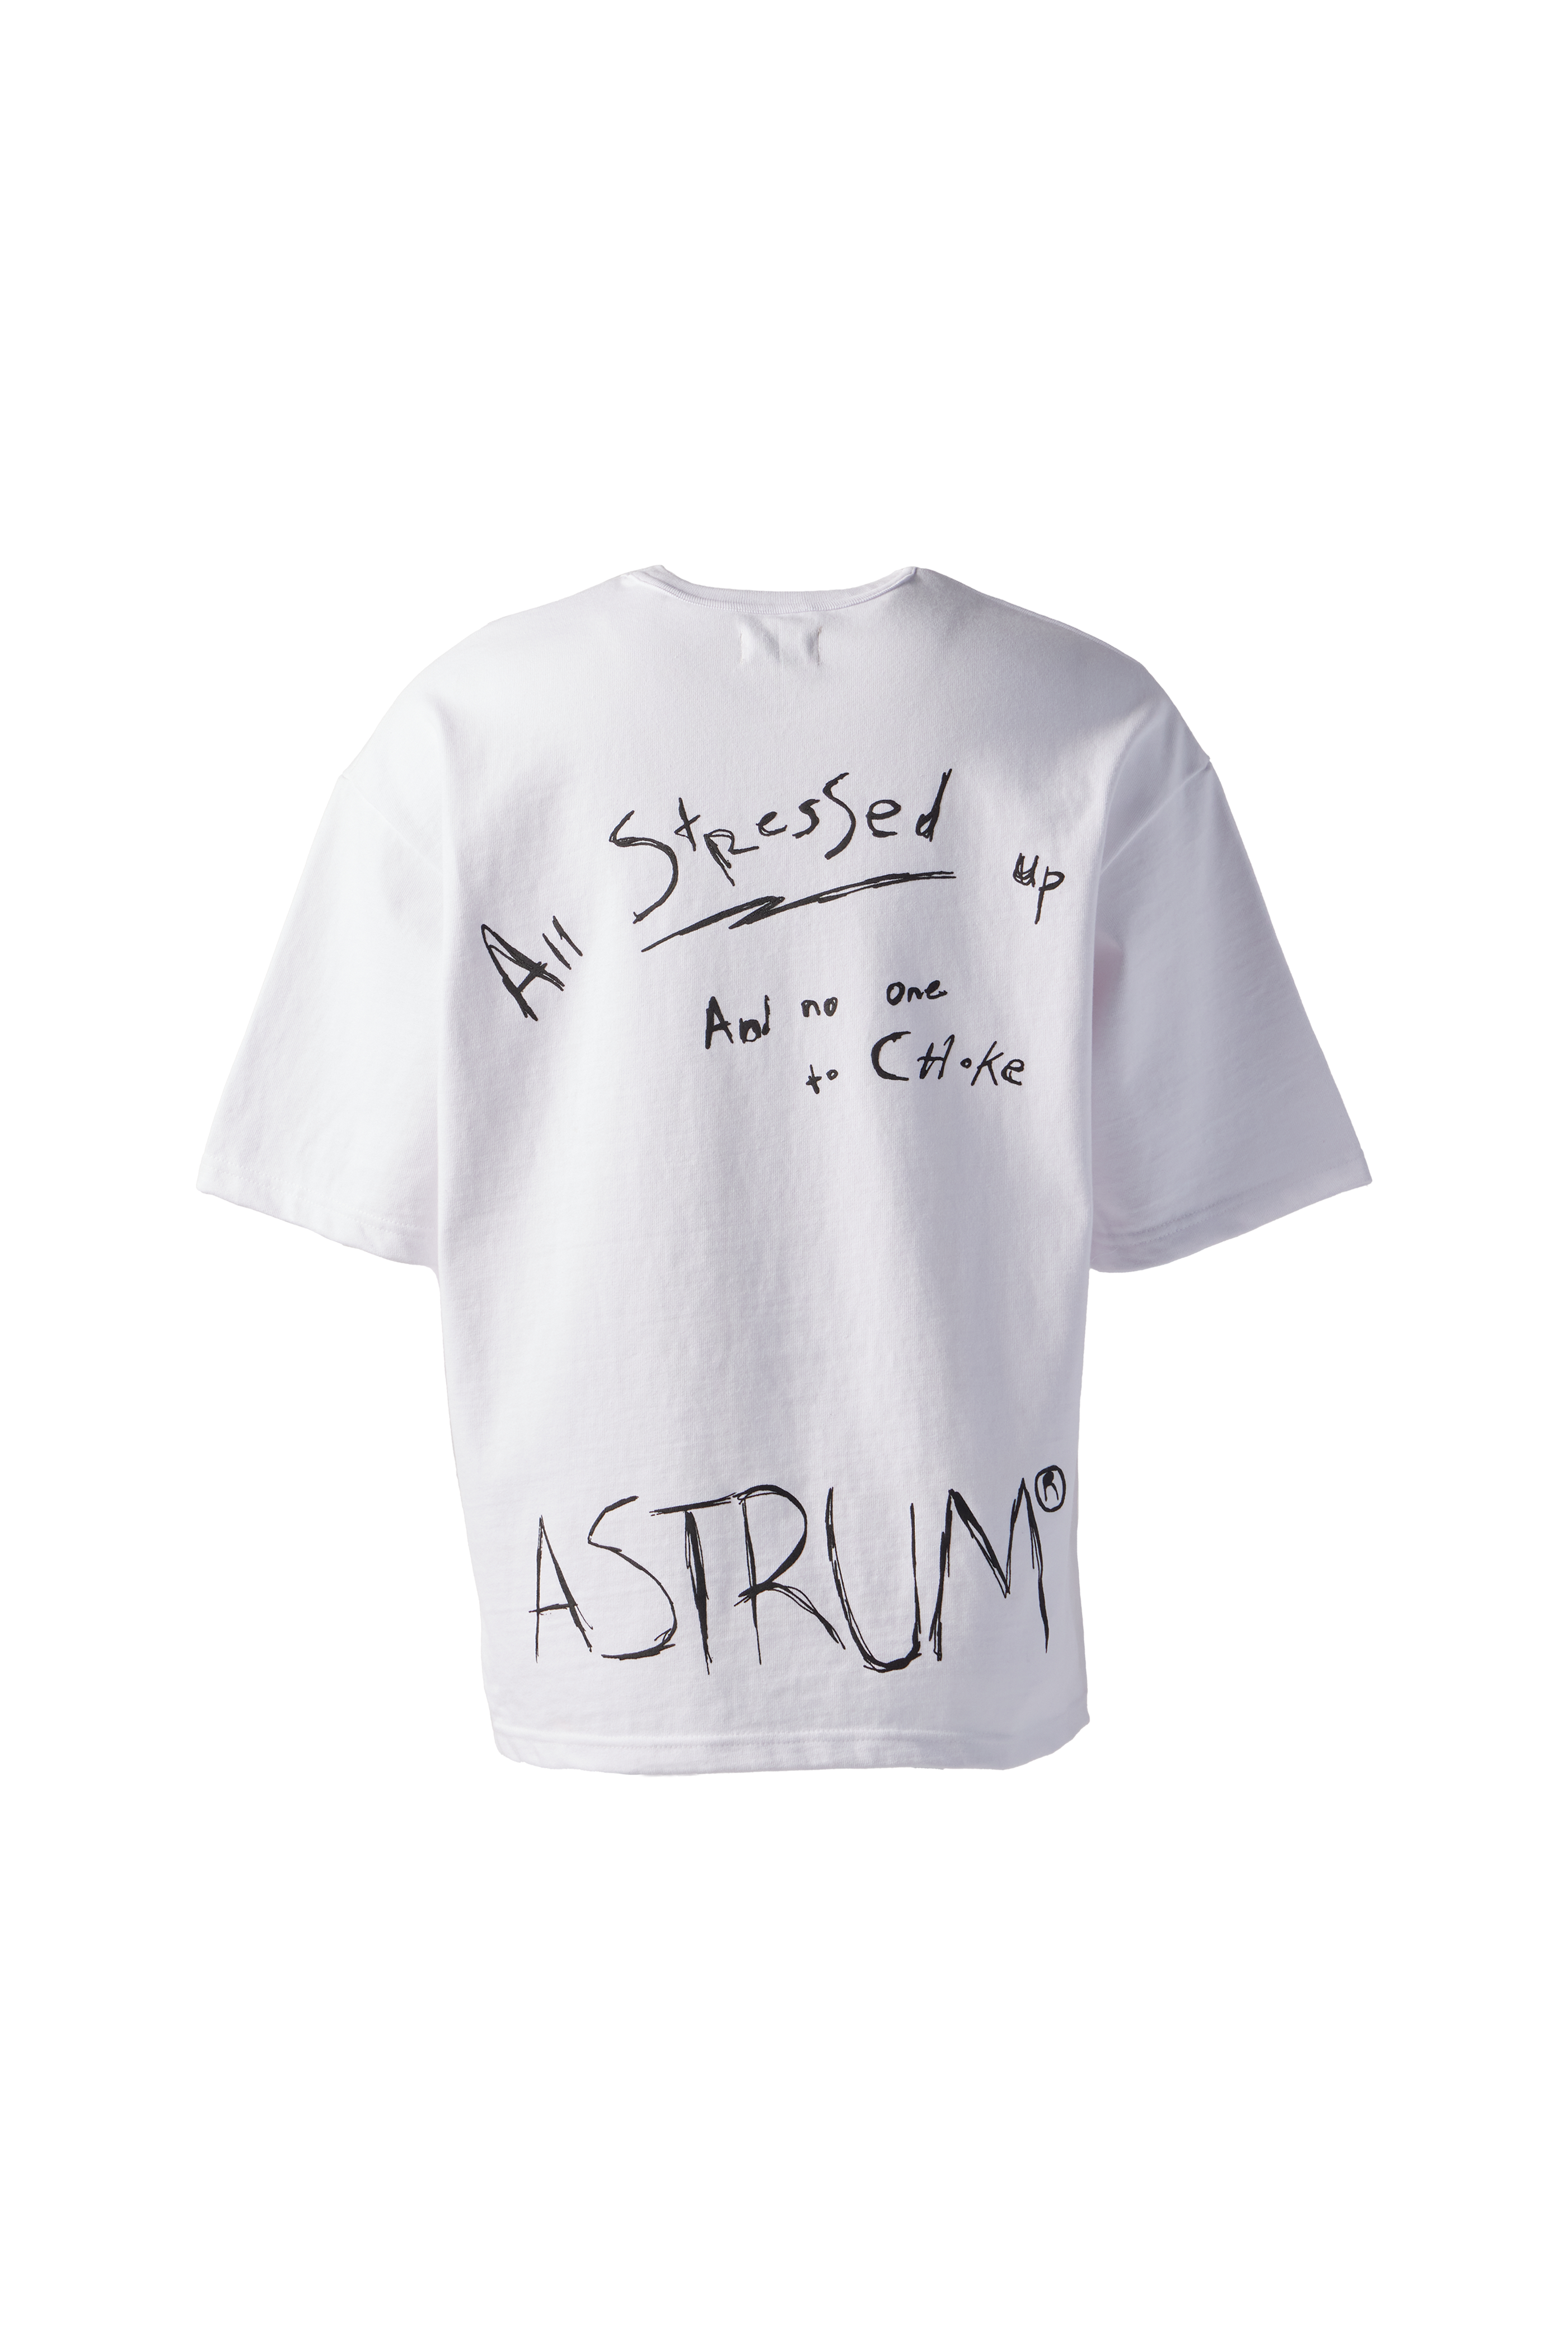 ASTRUM - Stressed Tee product image